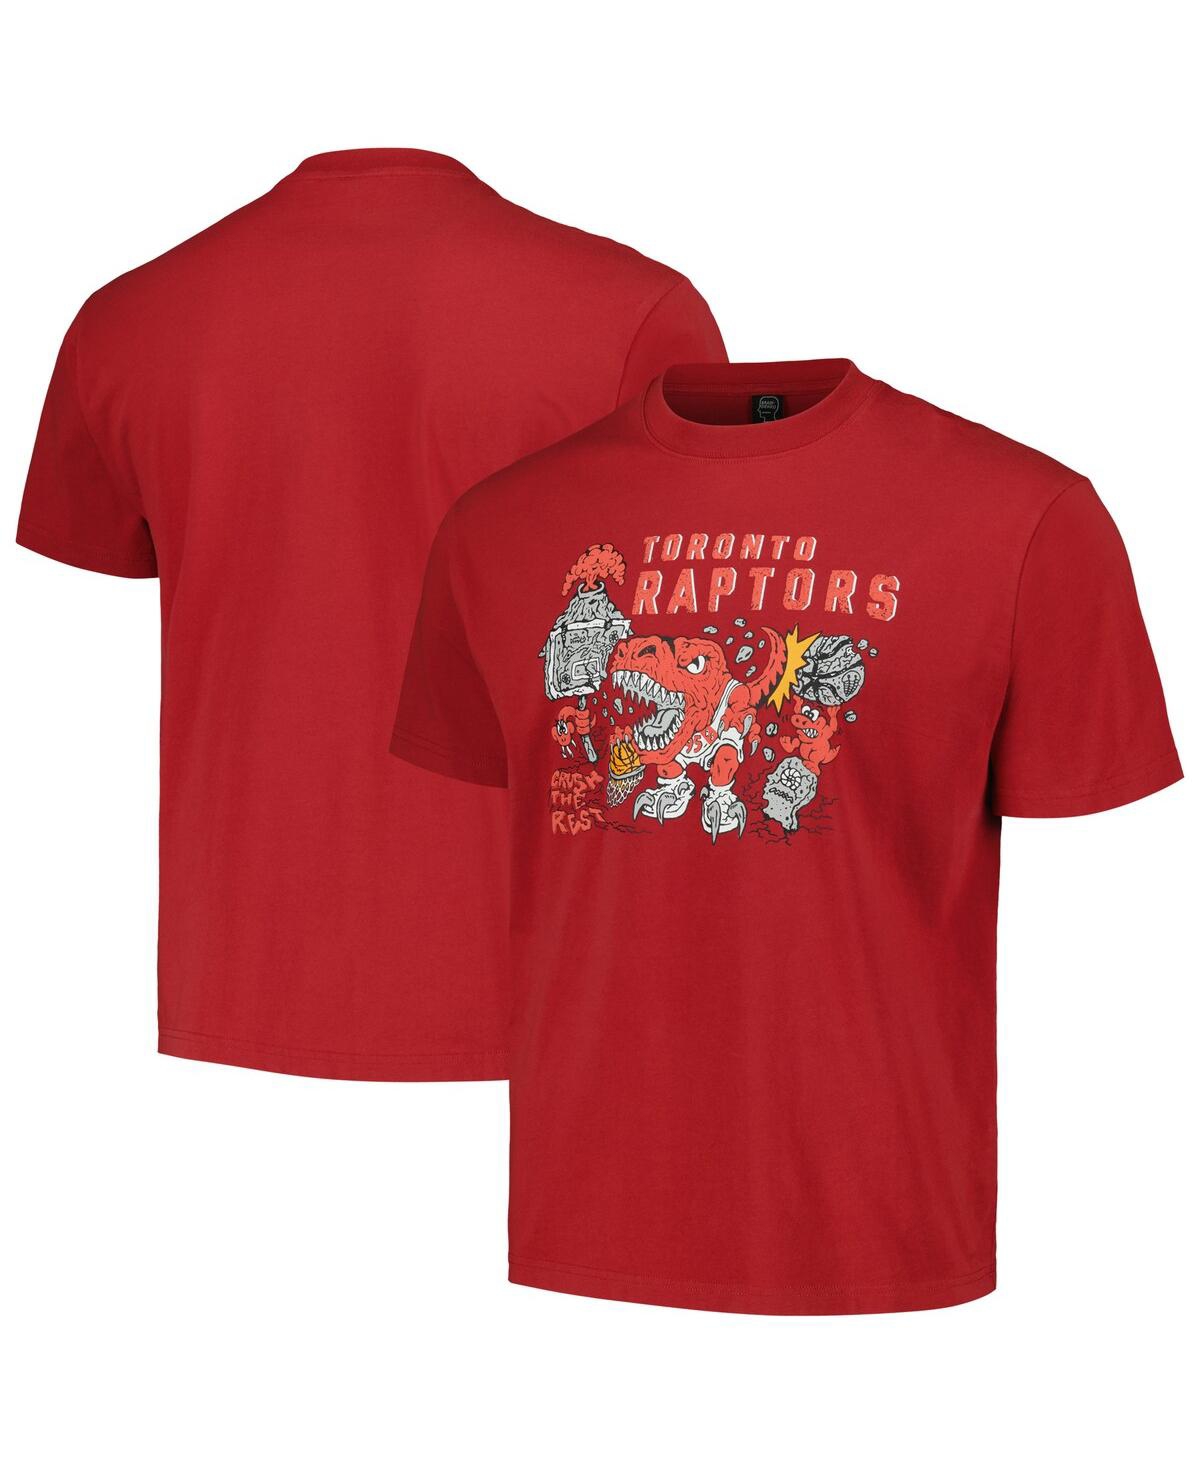 Men's and Women's Nba x Brain DeadÂ Red Toronto Raptors Identify Artist Series T-shirt - Red